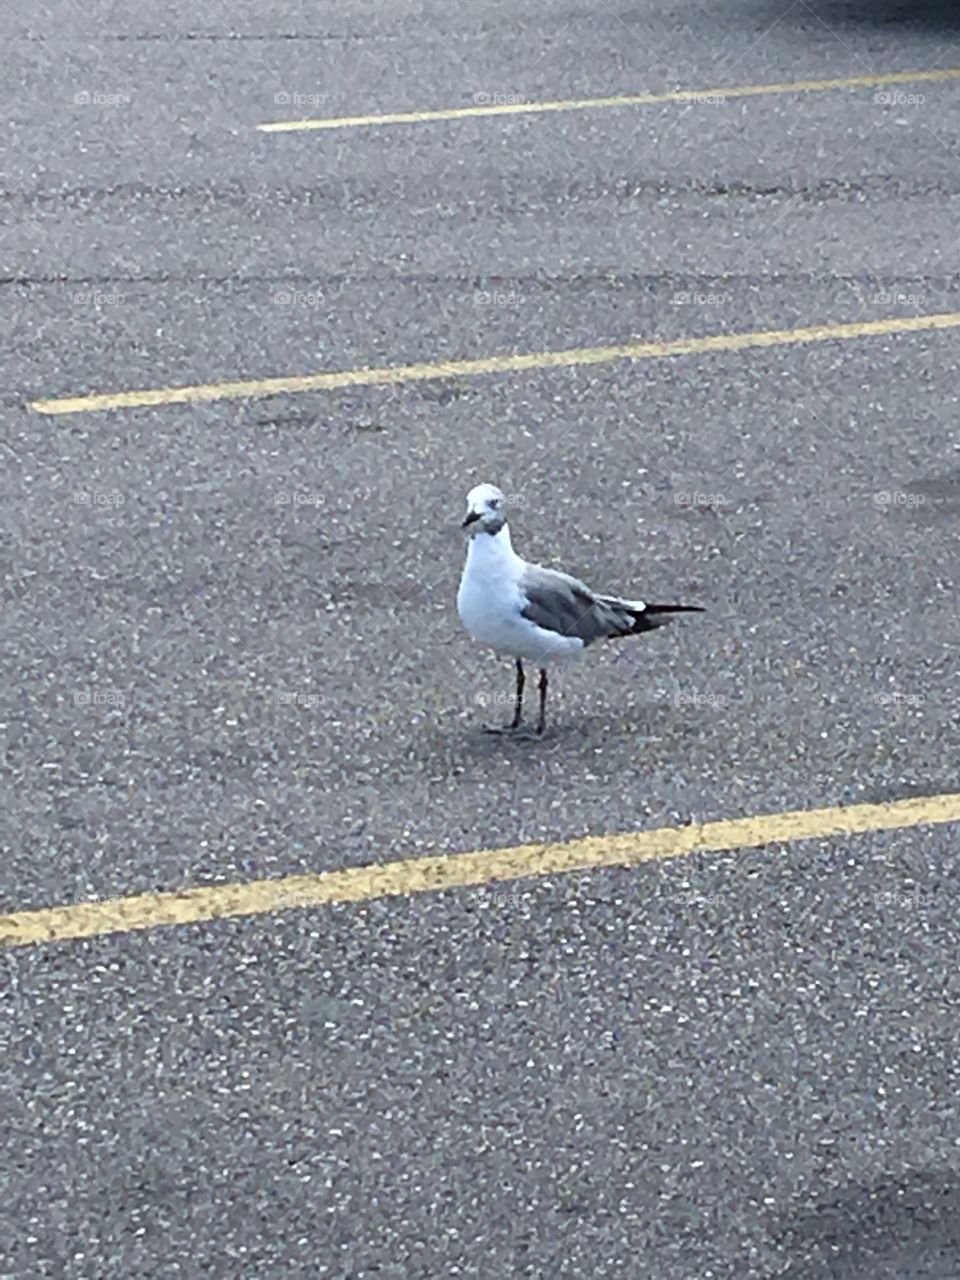 Bird shopping at Walmart 